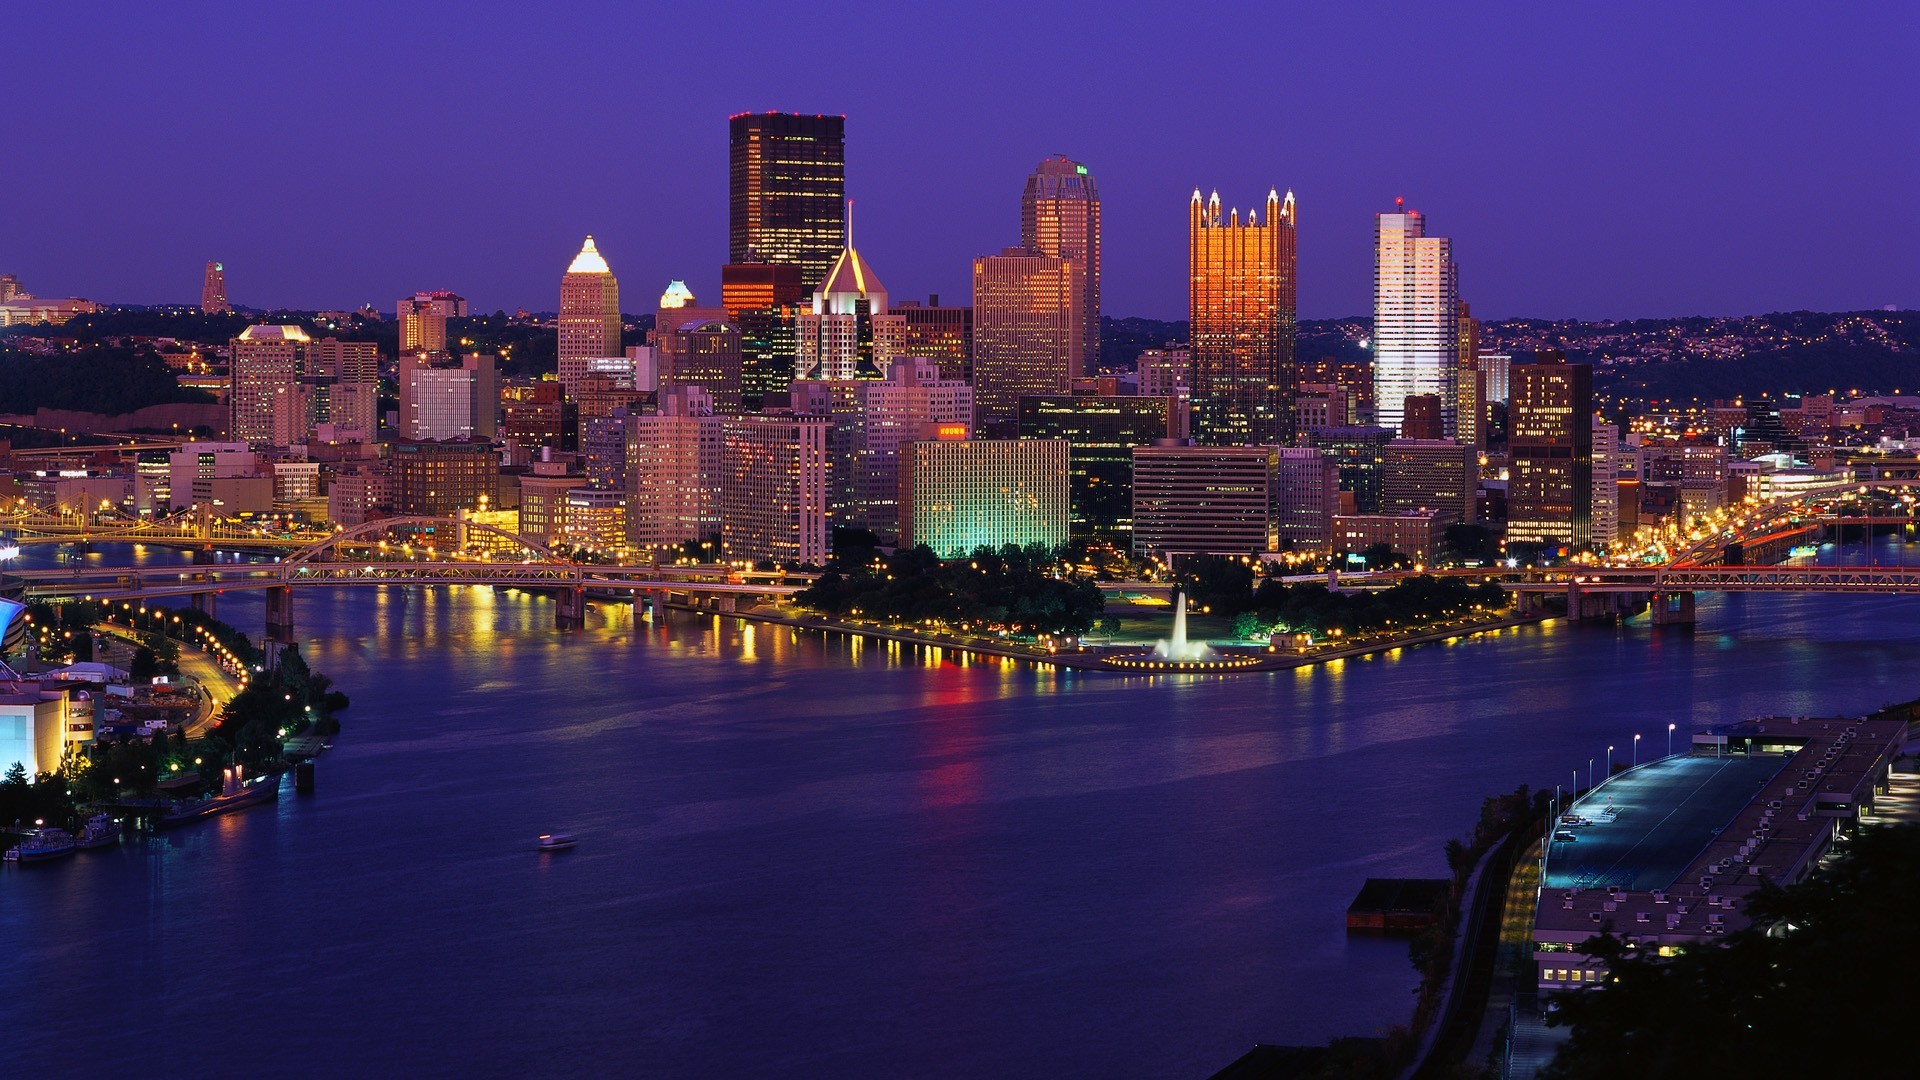 General 1920x1080 Pittsburgh Pennsylvania USA night cityscape city lights low light